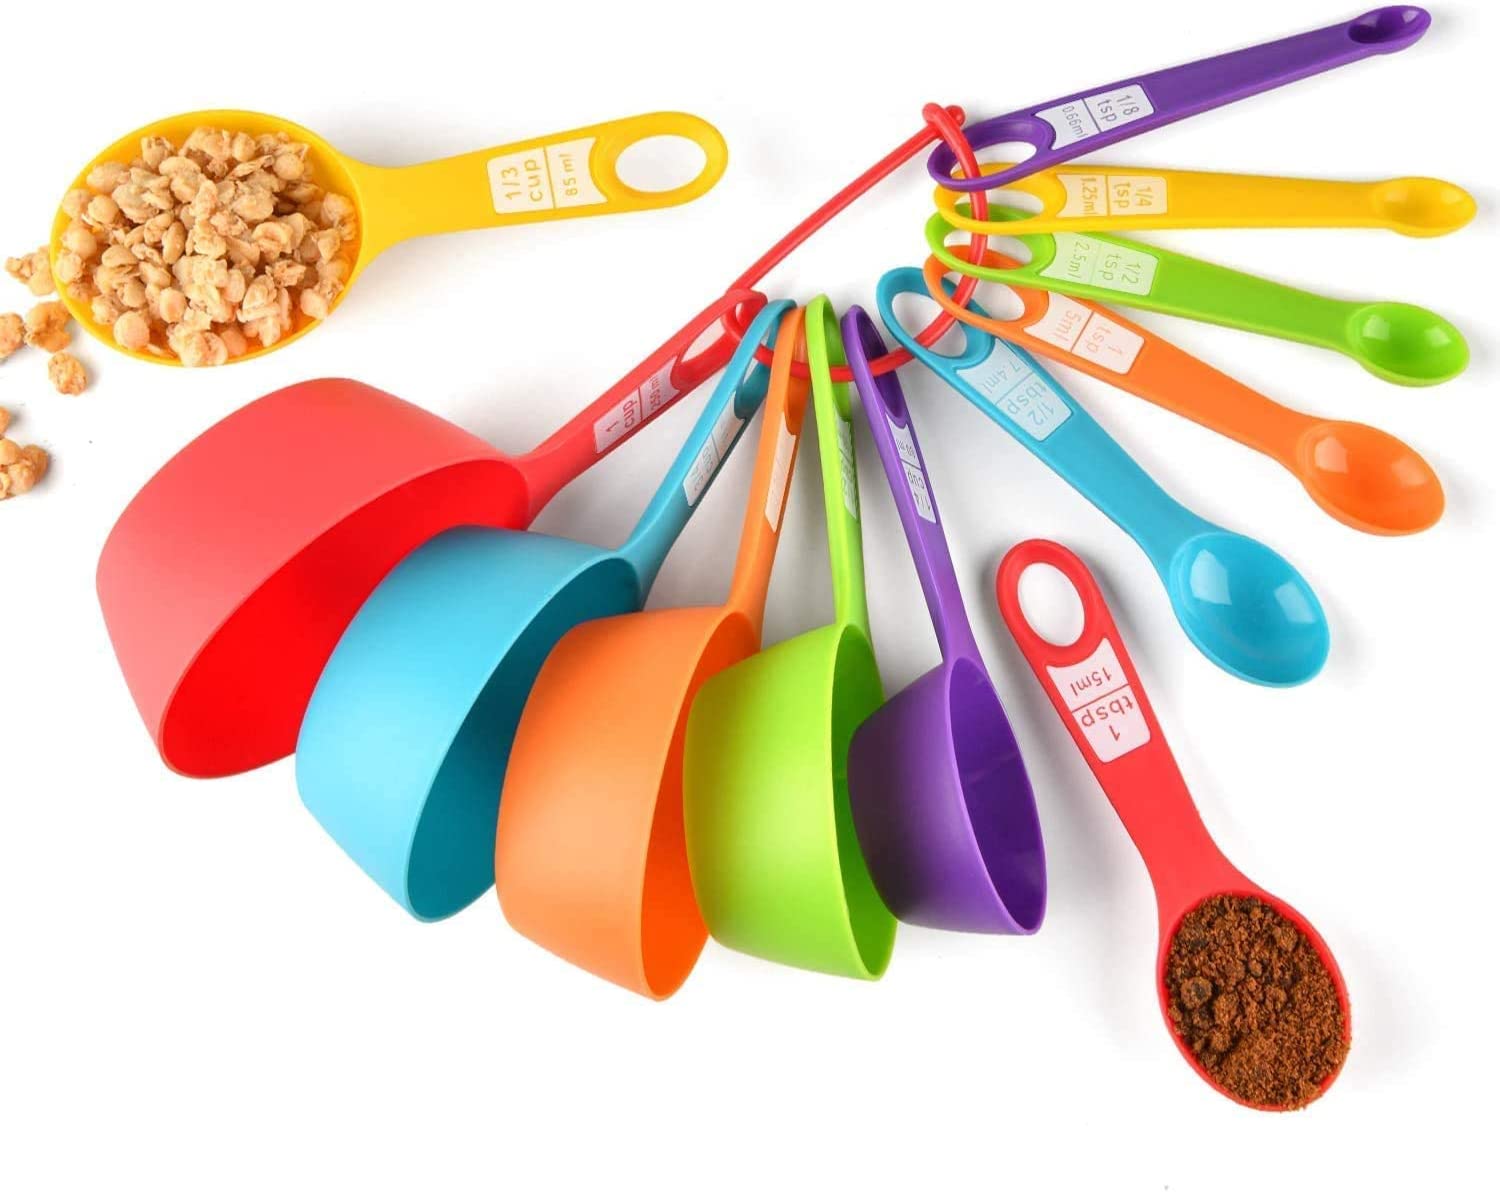 12 Pcs Measuring Cups and Spoons Set - Dishwasher Safe Measuring Utensils Set for Dry & Liquid Ingredients